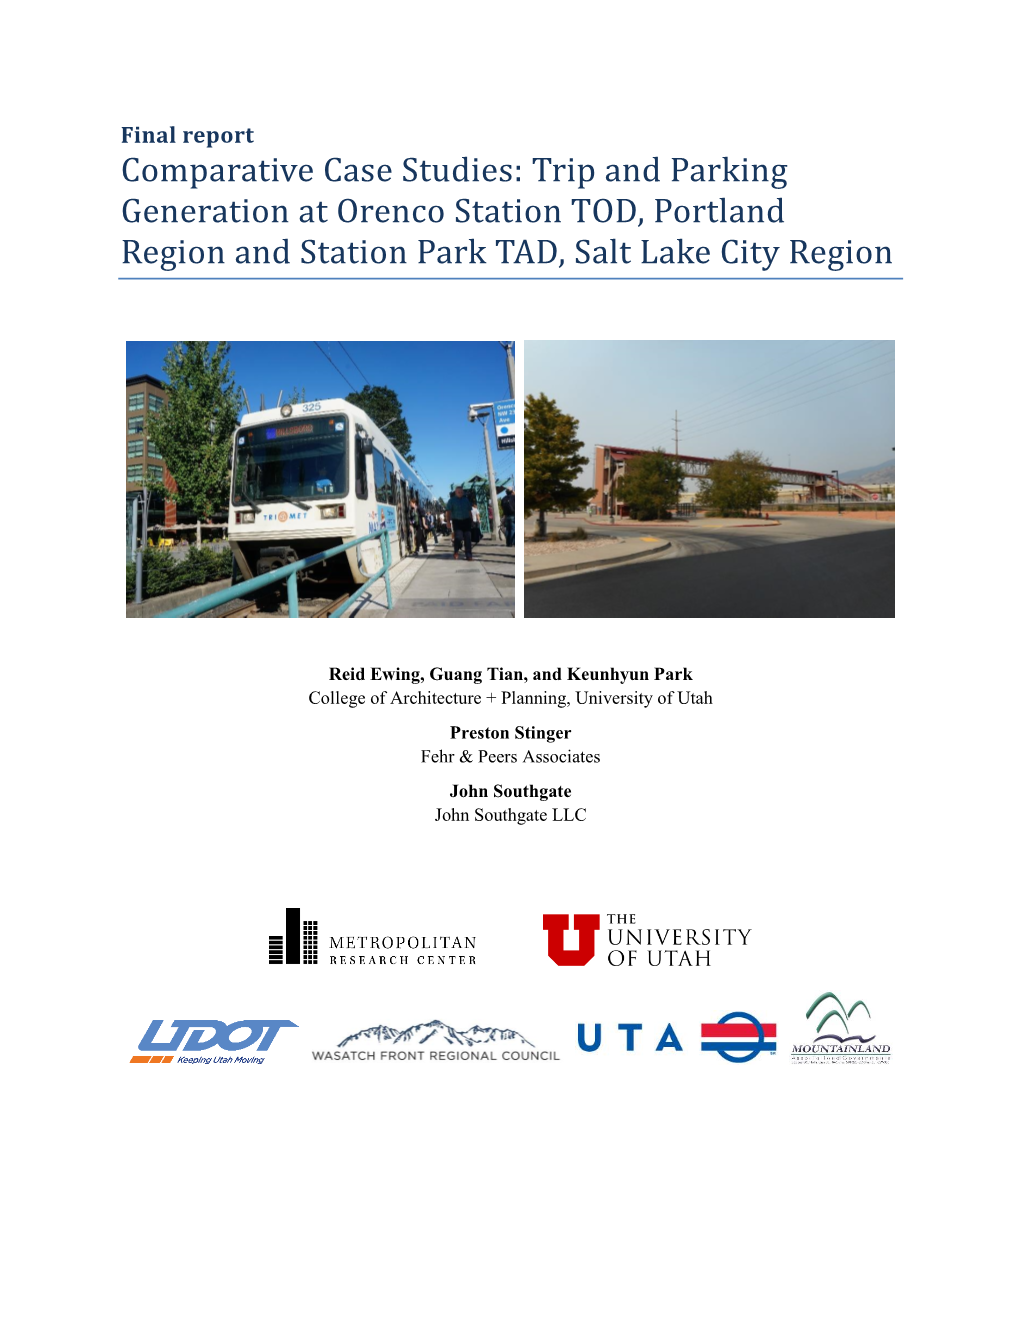 Comparative Case Studies: Trip and Parking Generation at Orenco Station TOD, Portland Region and Station Park TAD, Salt Lake City Region